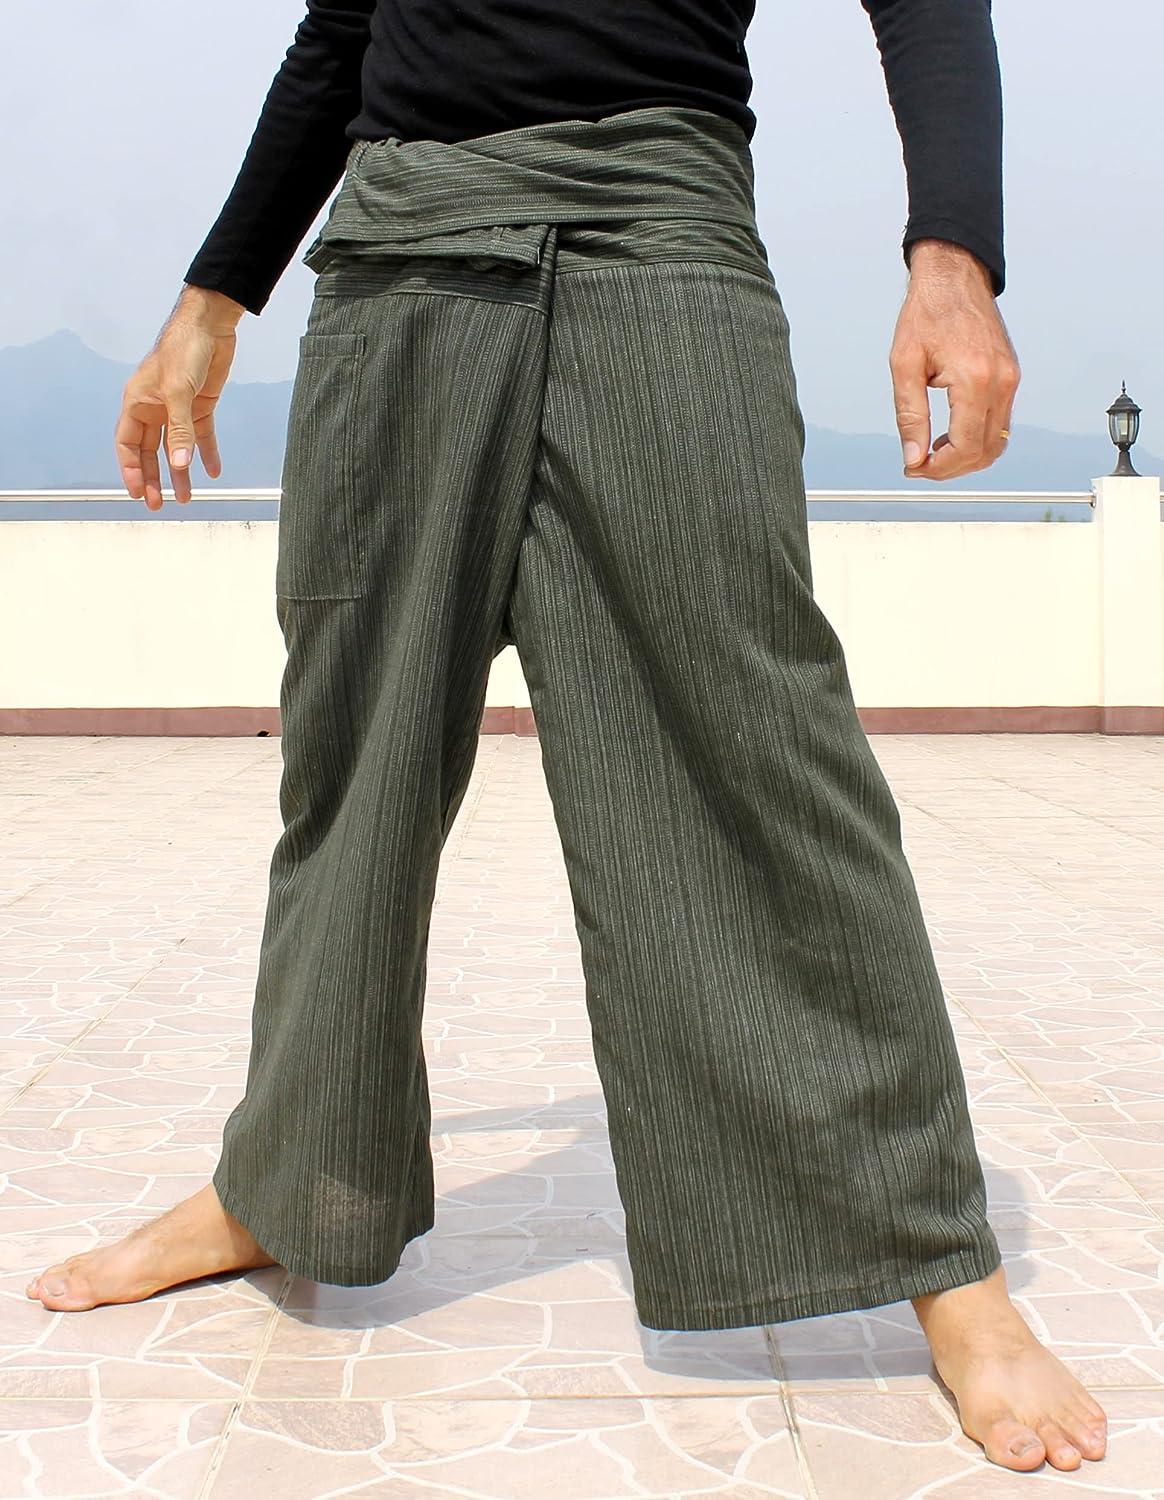 White Long Cotton Fisherman Pants for Men, fisherman pants for 